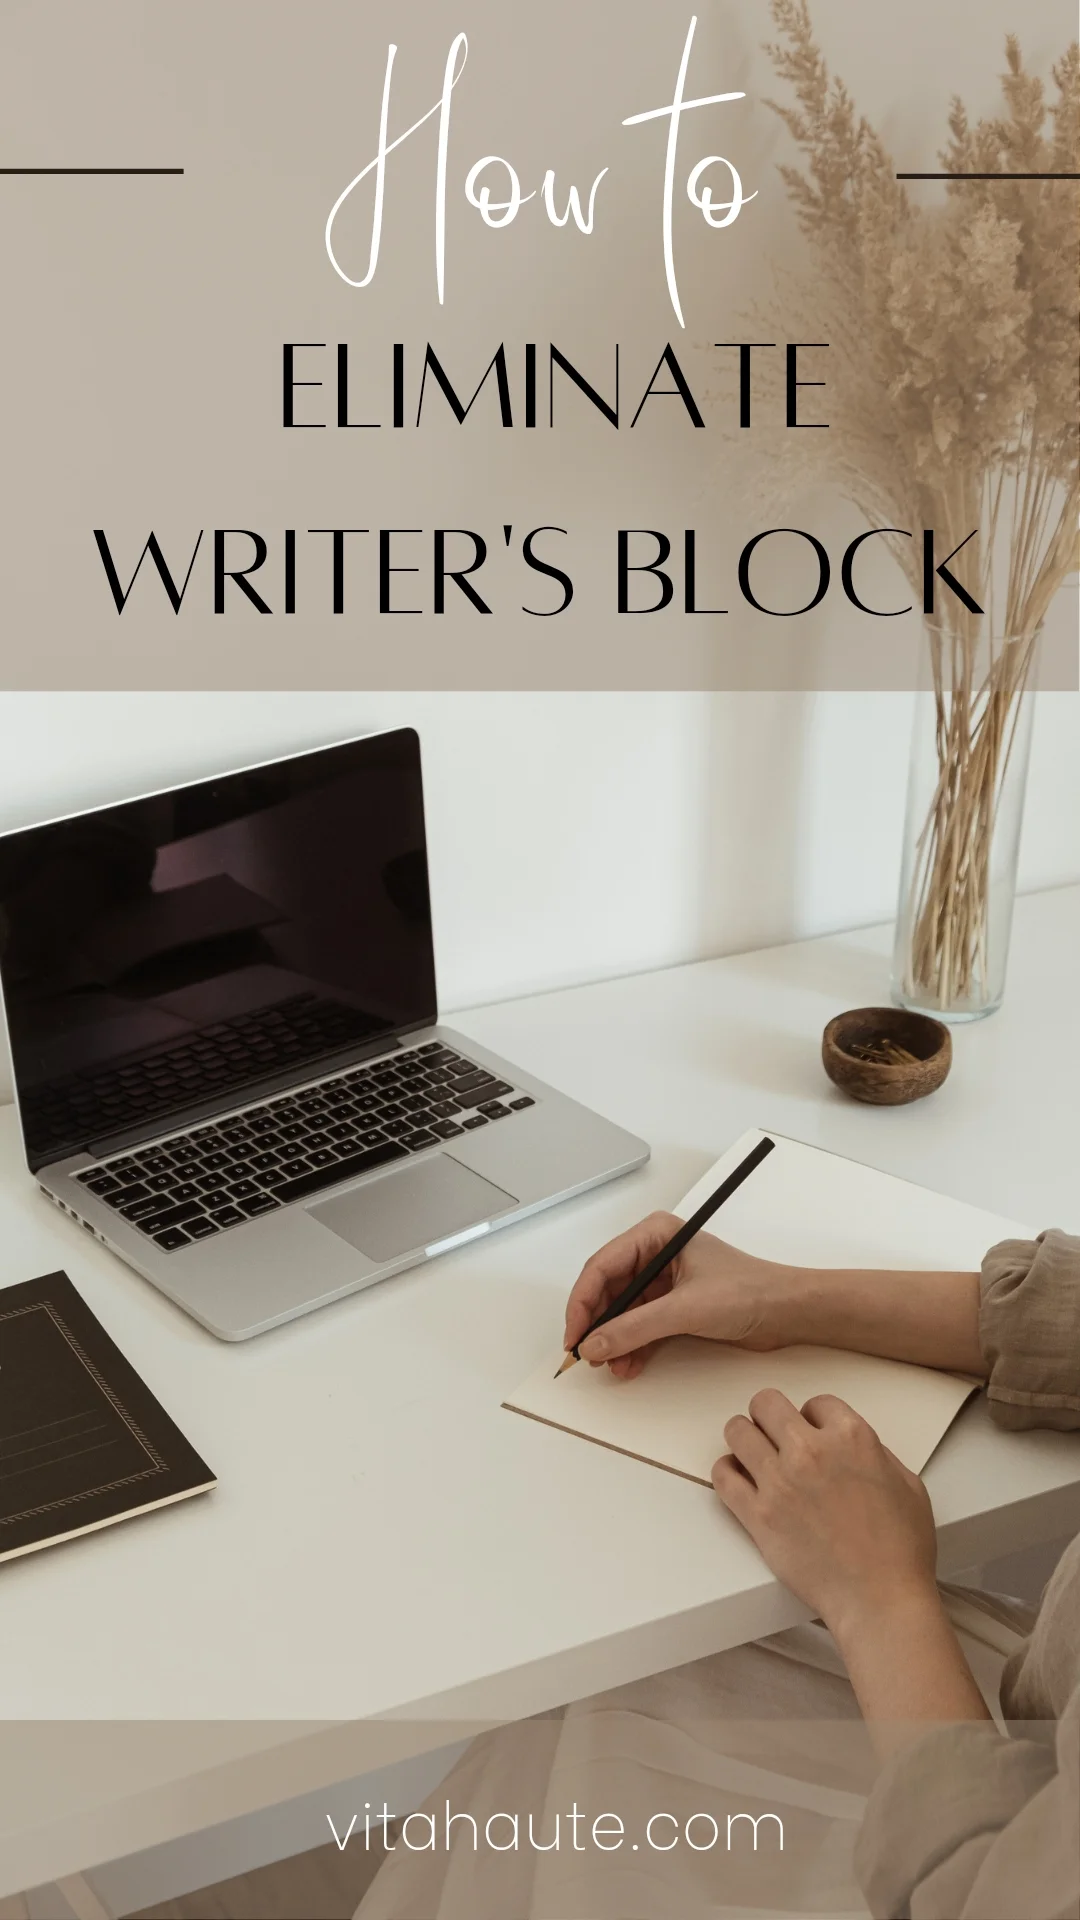 How to eliminate writer's block Pinterest pin